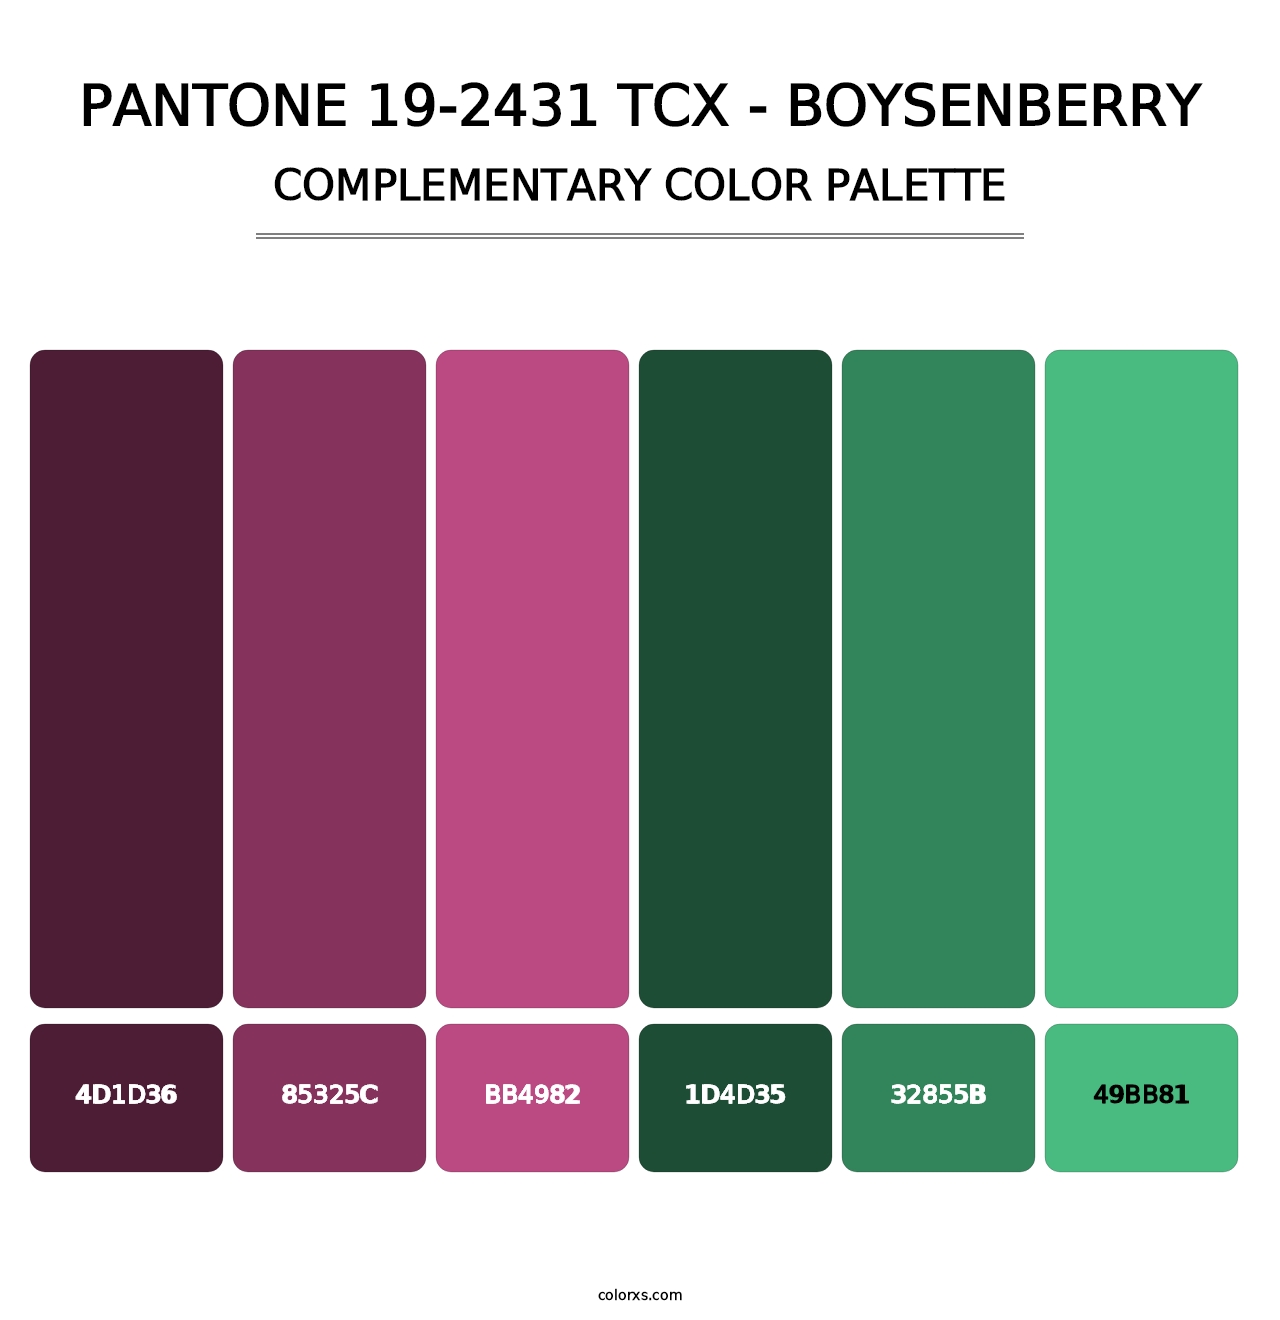 PANTONE 19-2431 TCX - Boysenberry - Complementary Color Palette